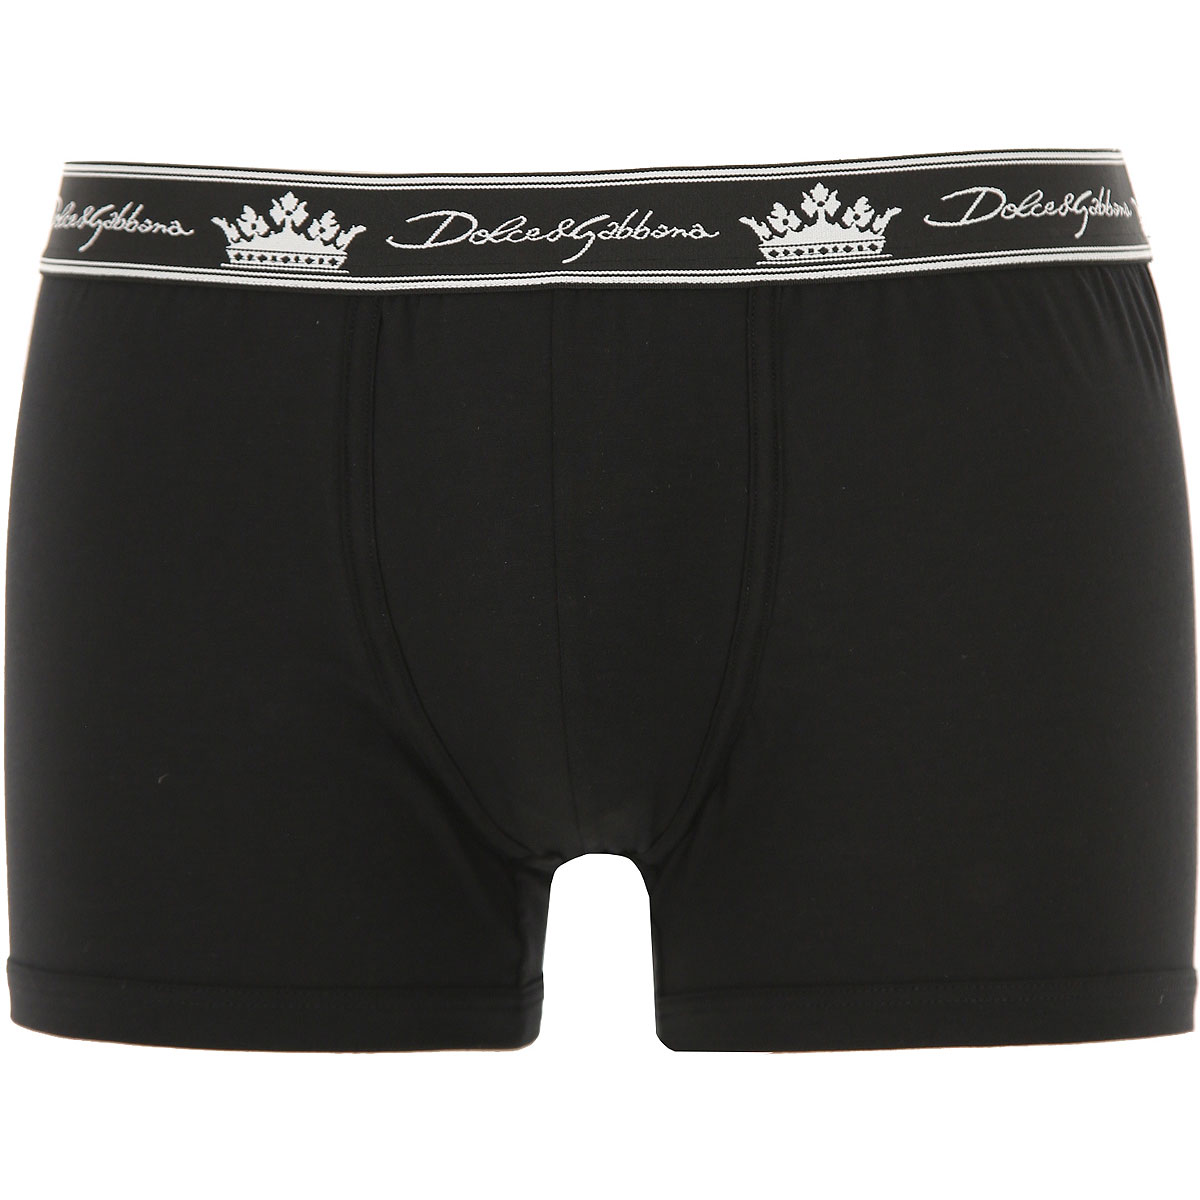 Von Dutch Boxer Shorts con logotipo 